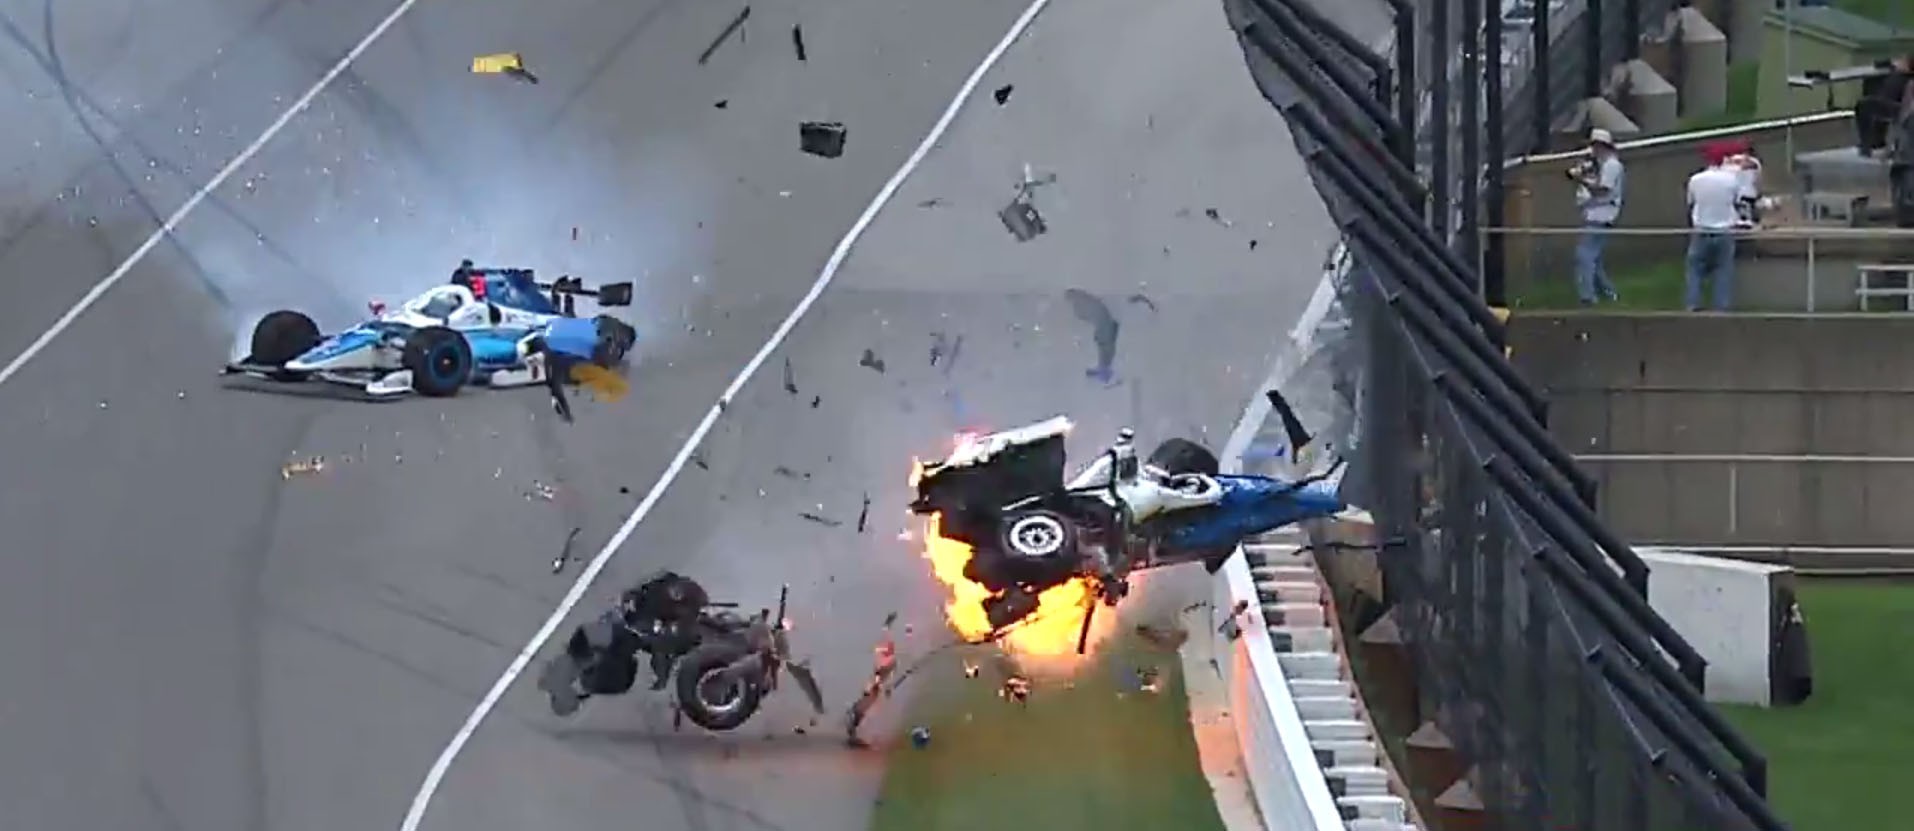 Scott Dixon S Horrible Indianapolis 500 Crash Is A Testament To Racing Safety Autoevolution